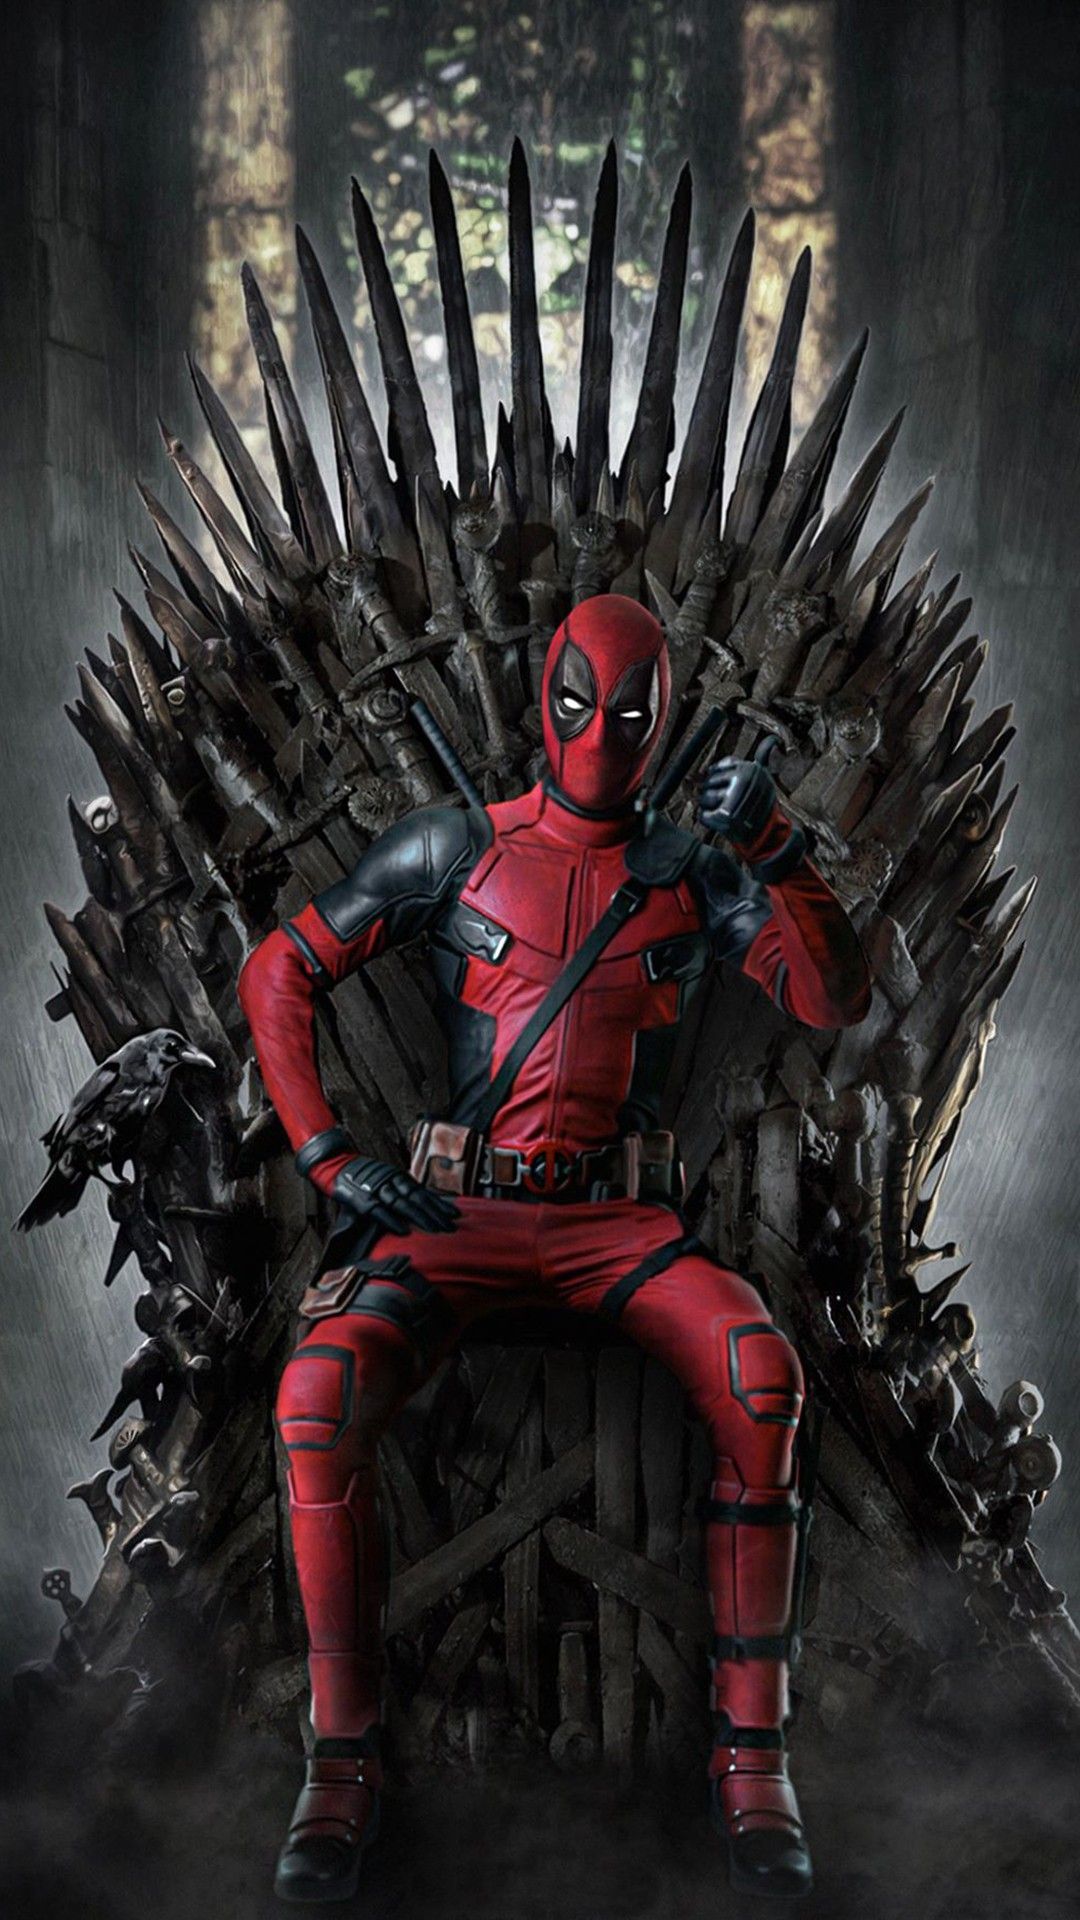 Deadpool on the throne. Deadpool wallpaper, Marvel comics wallpaper, Deadpool art